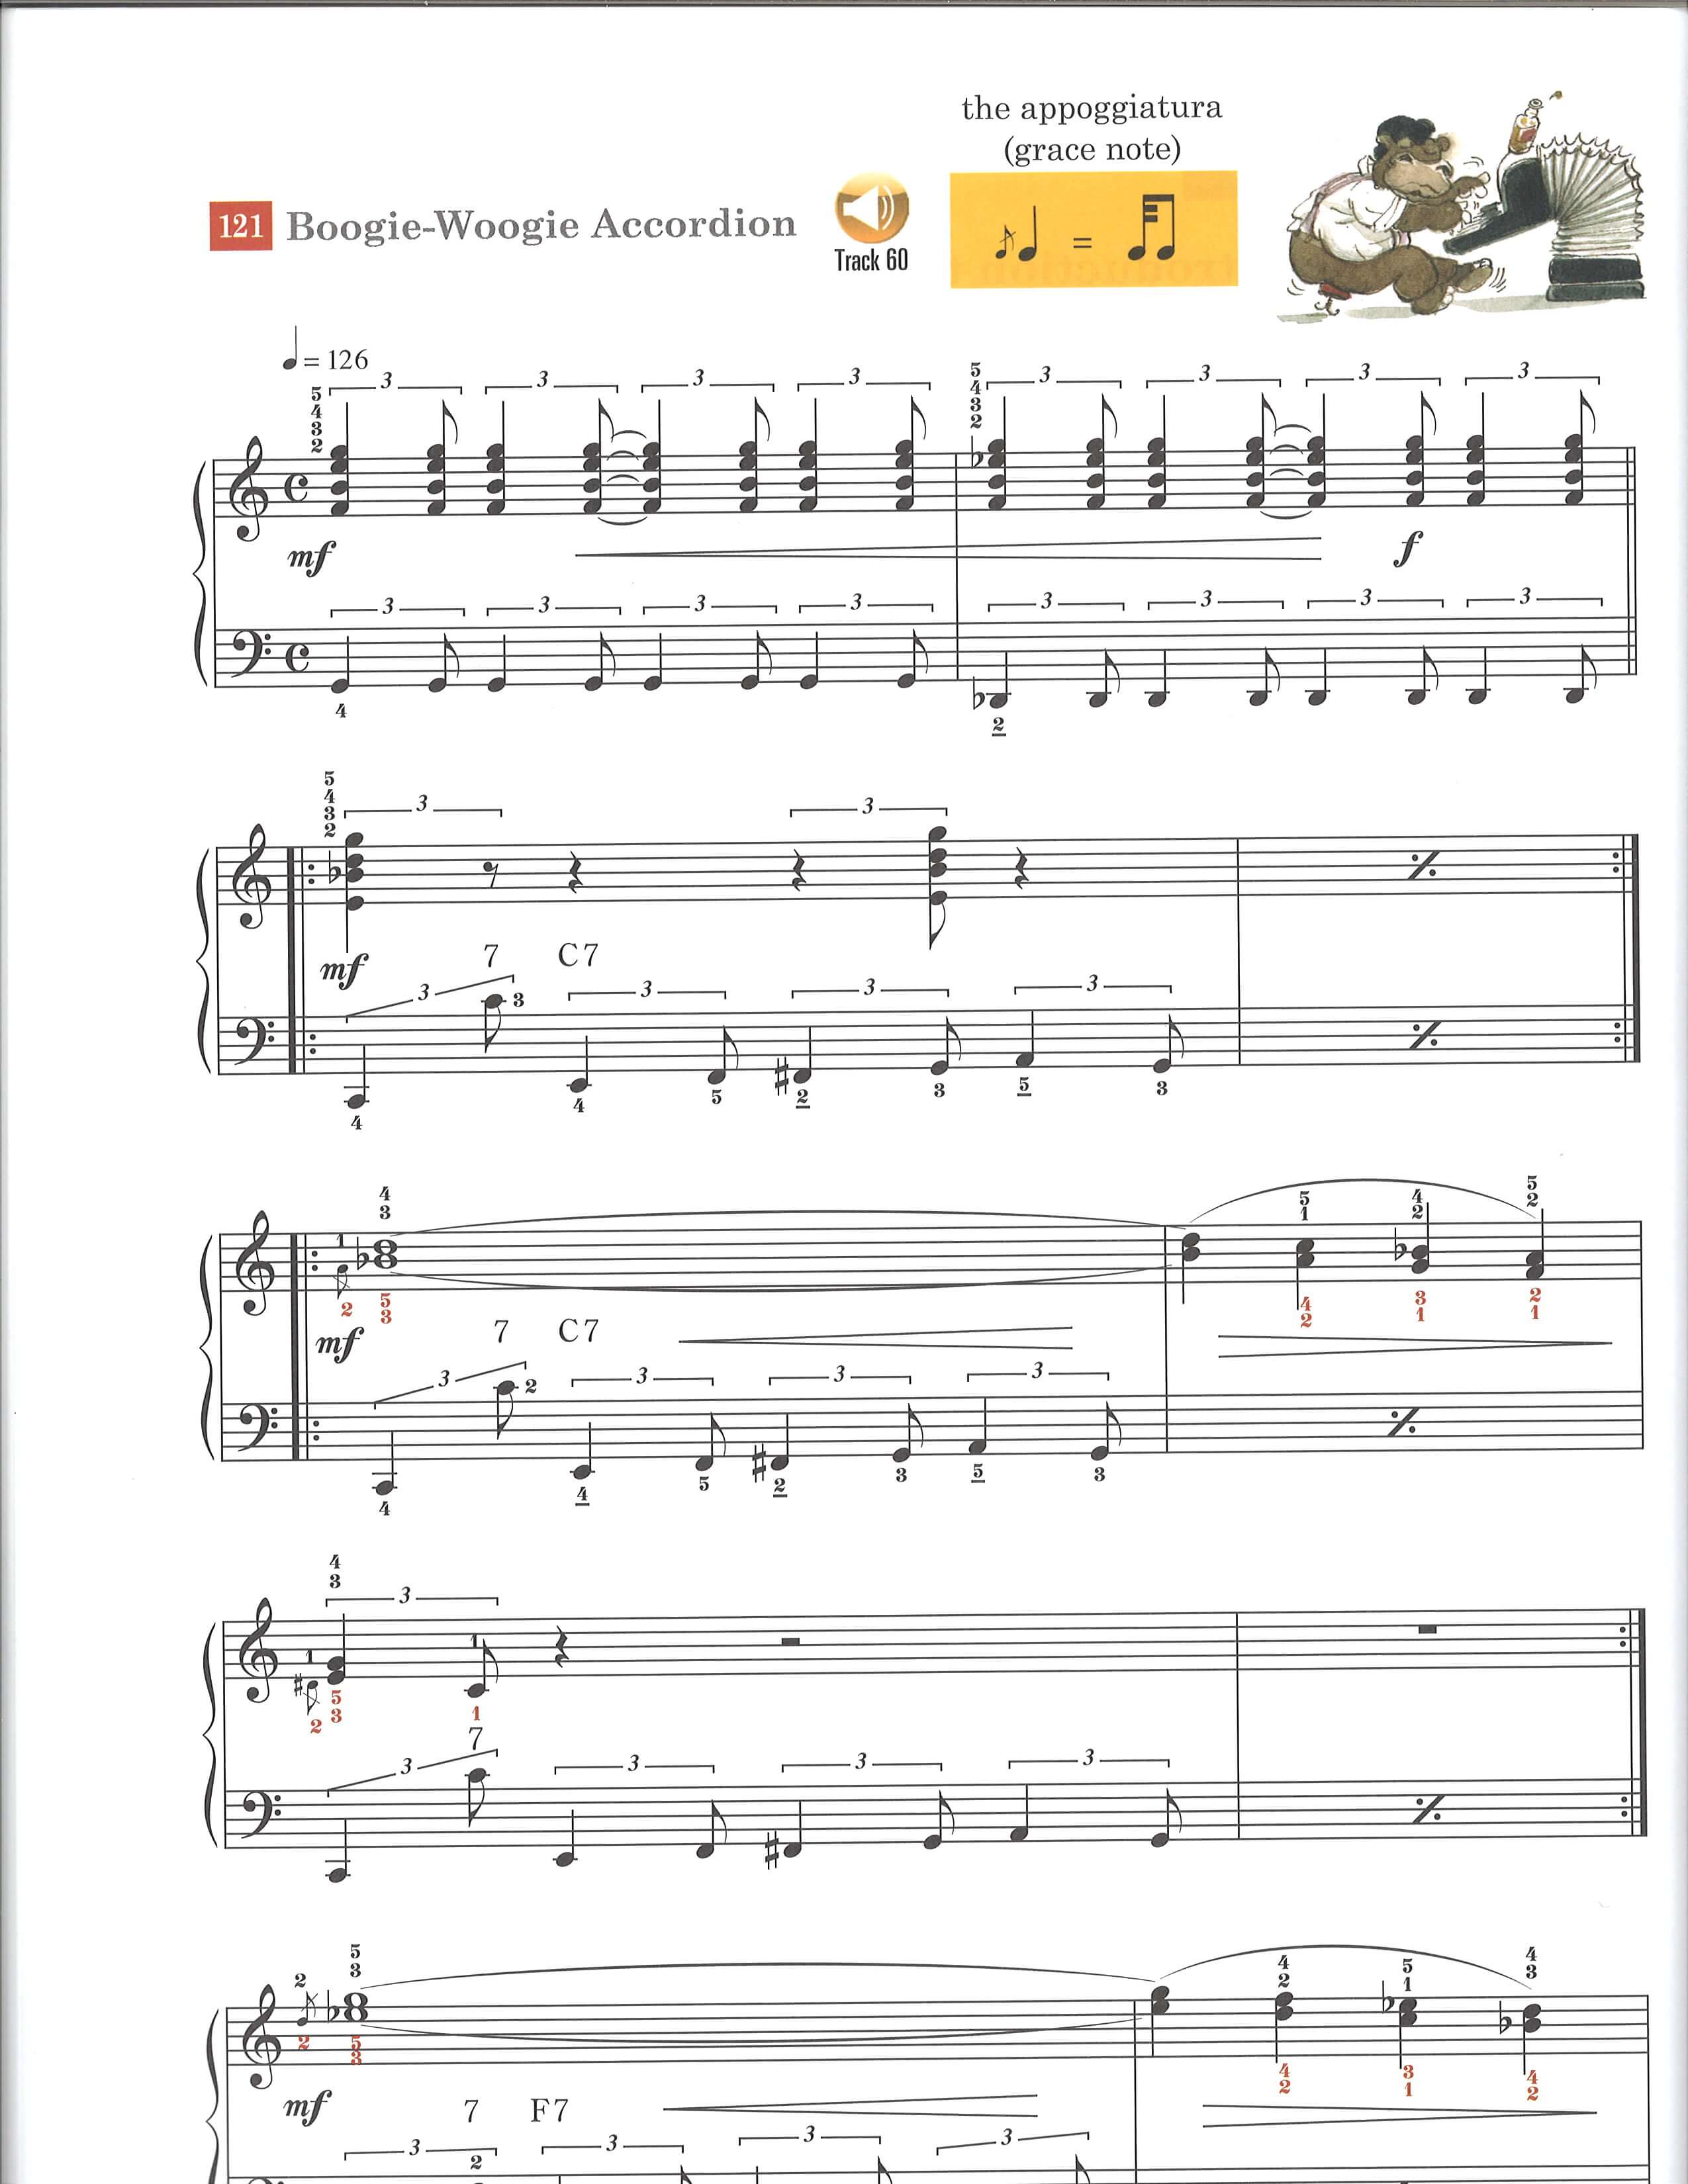 Complete Accordion Method By Richard Galliano